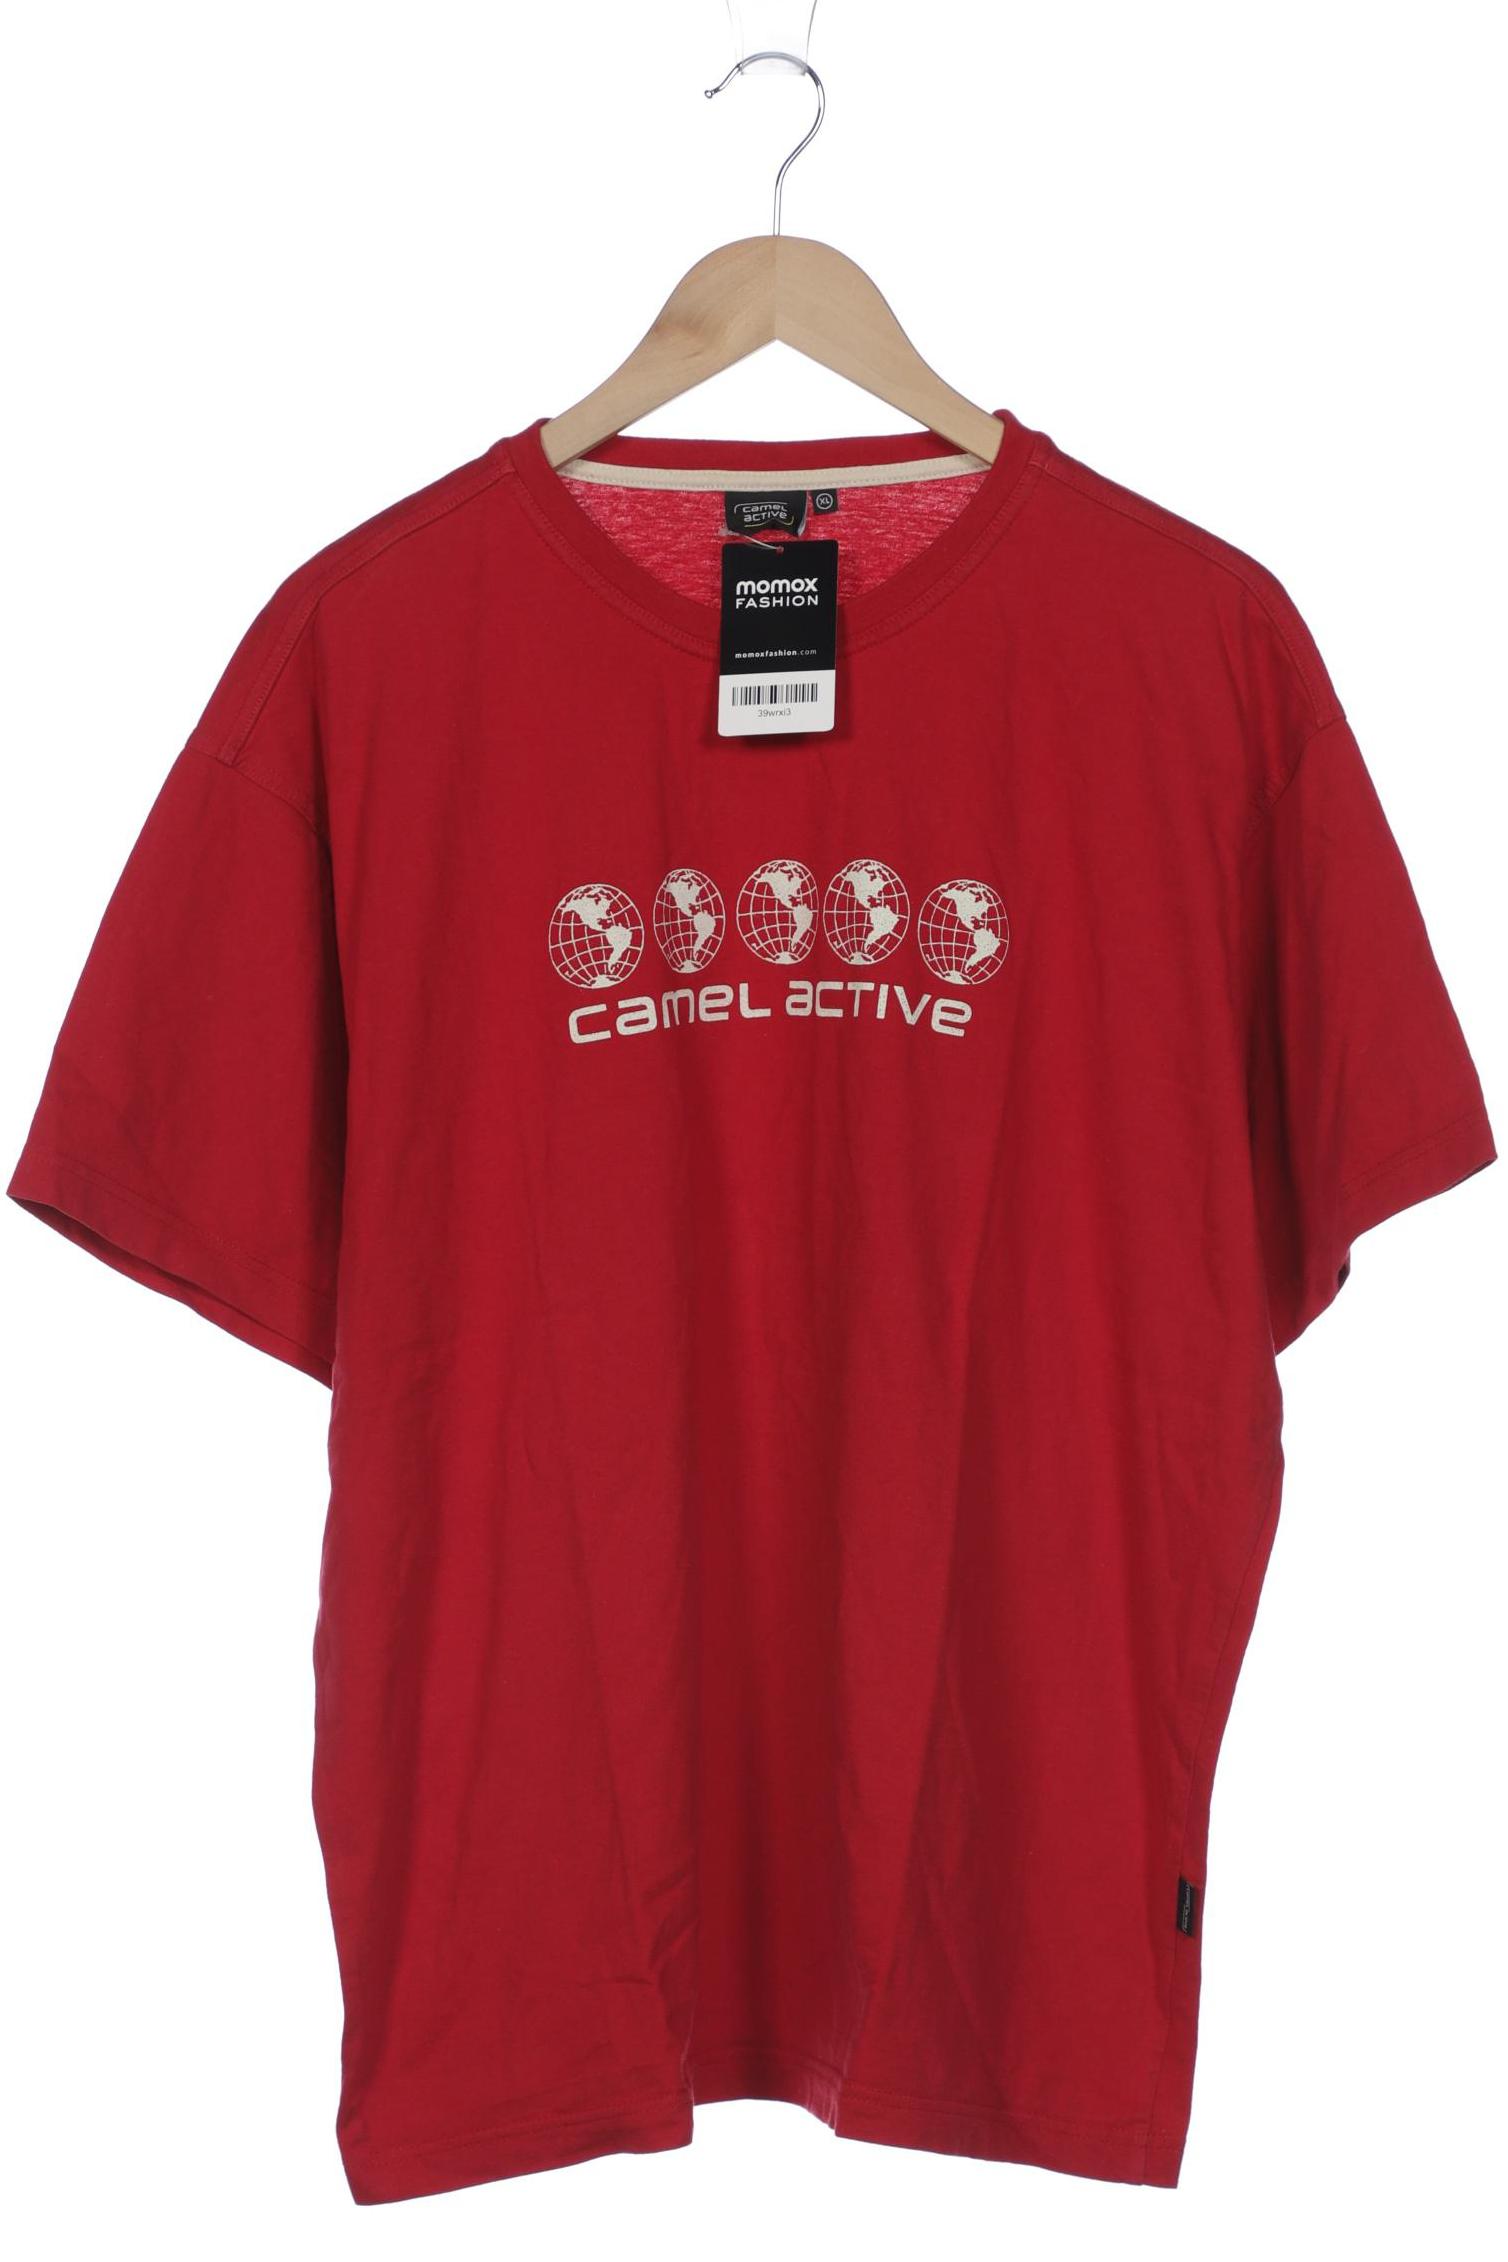 camel active Herren T-Shirt, rot von camel active